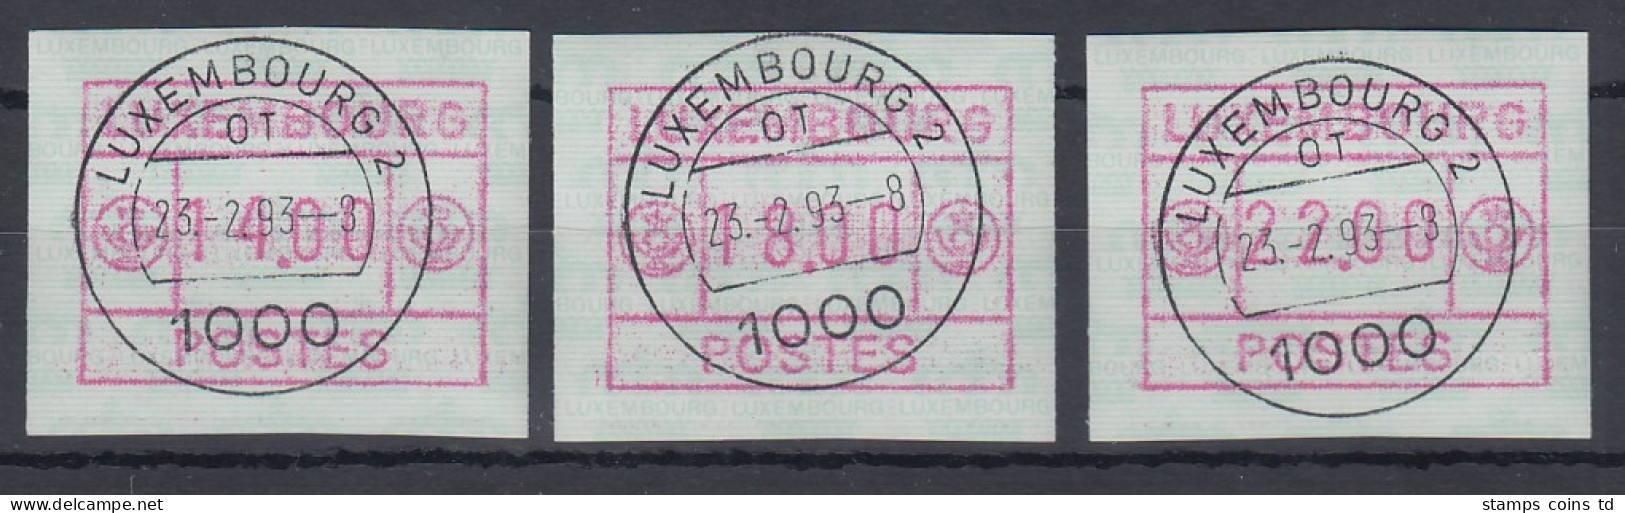 Luxemburg ATM Gr. POSTES Mi.-Nr. 3 Satz 14.00 - 18.00 - 22.00 O LUXEMBOURG 2 OT - Postage Labels